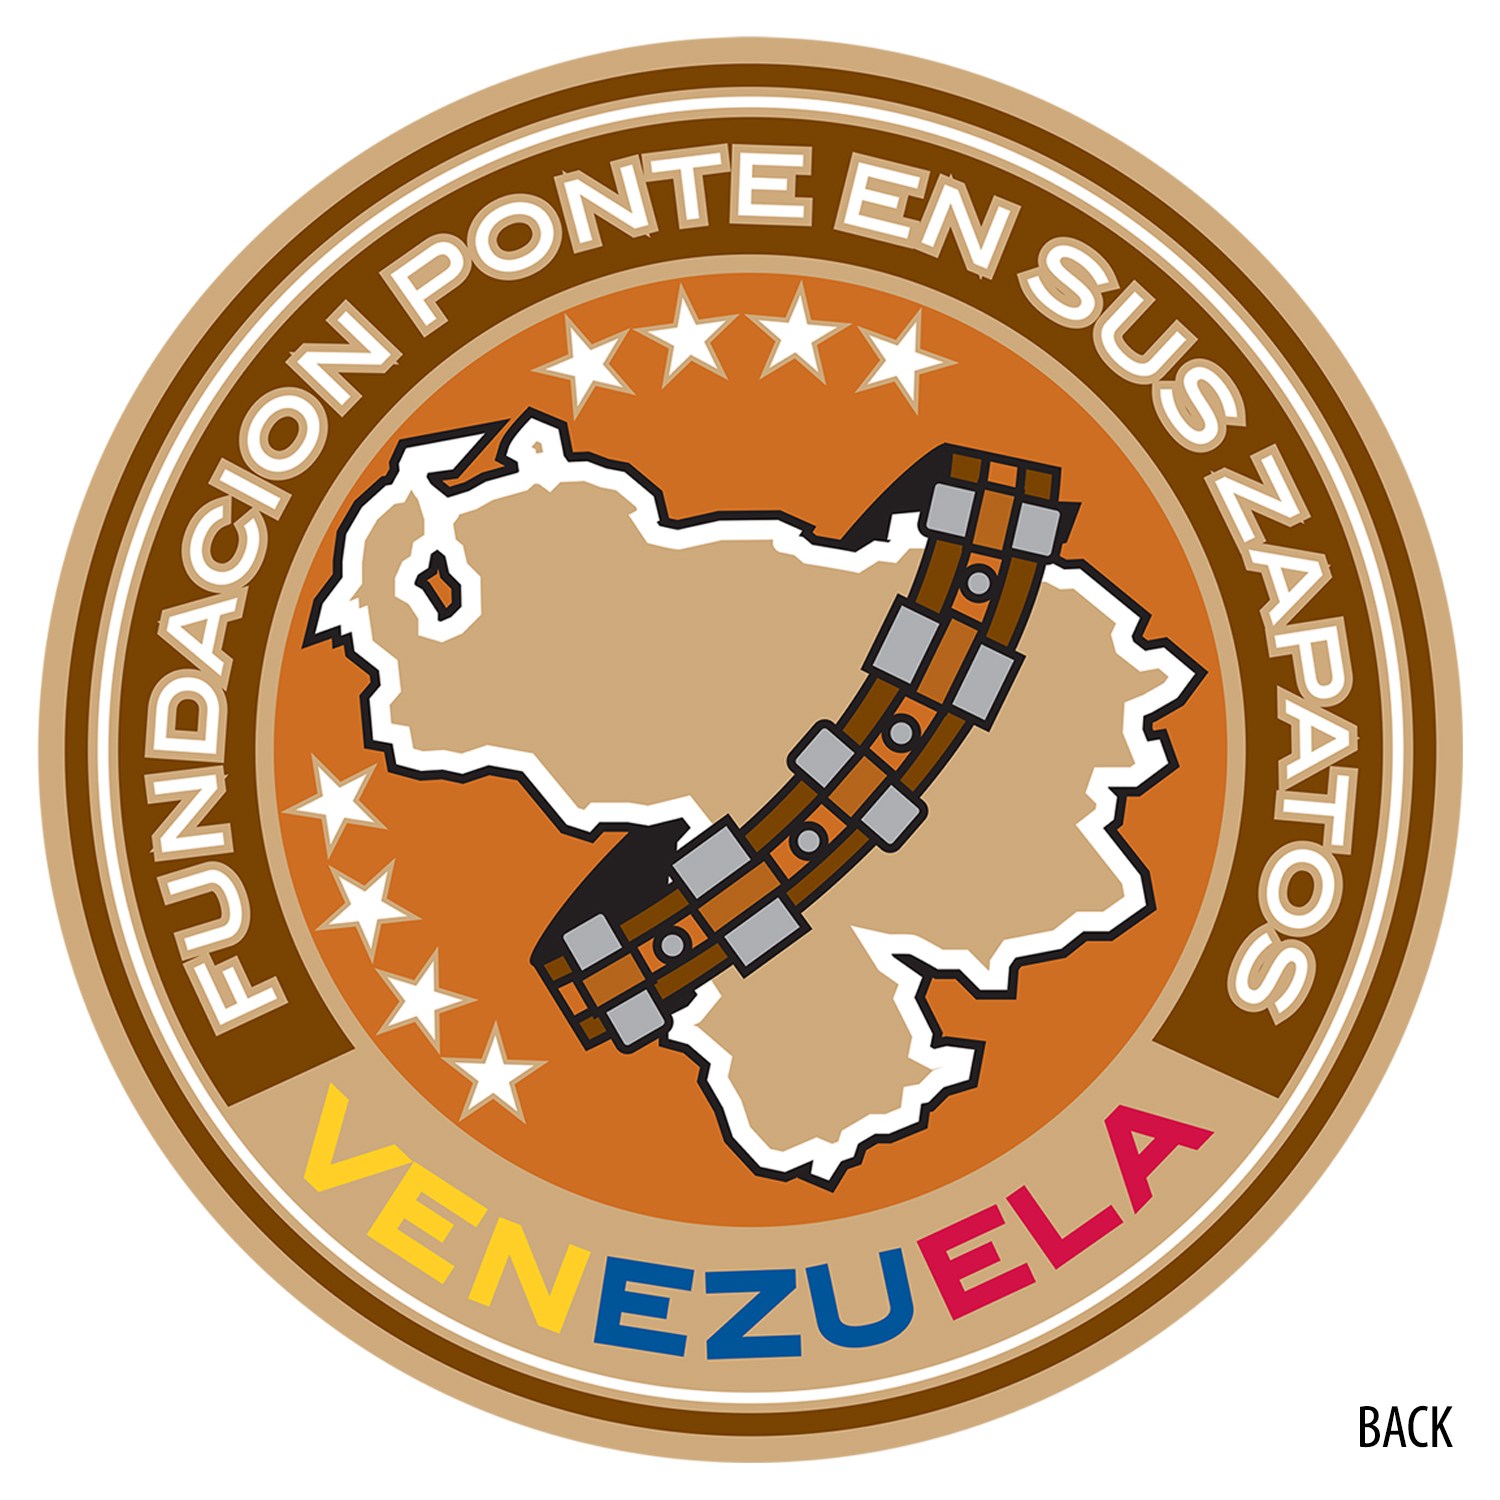 Peter Mahyew Fondation Coin venezuela